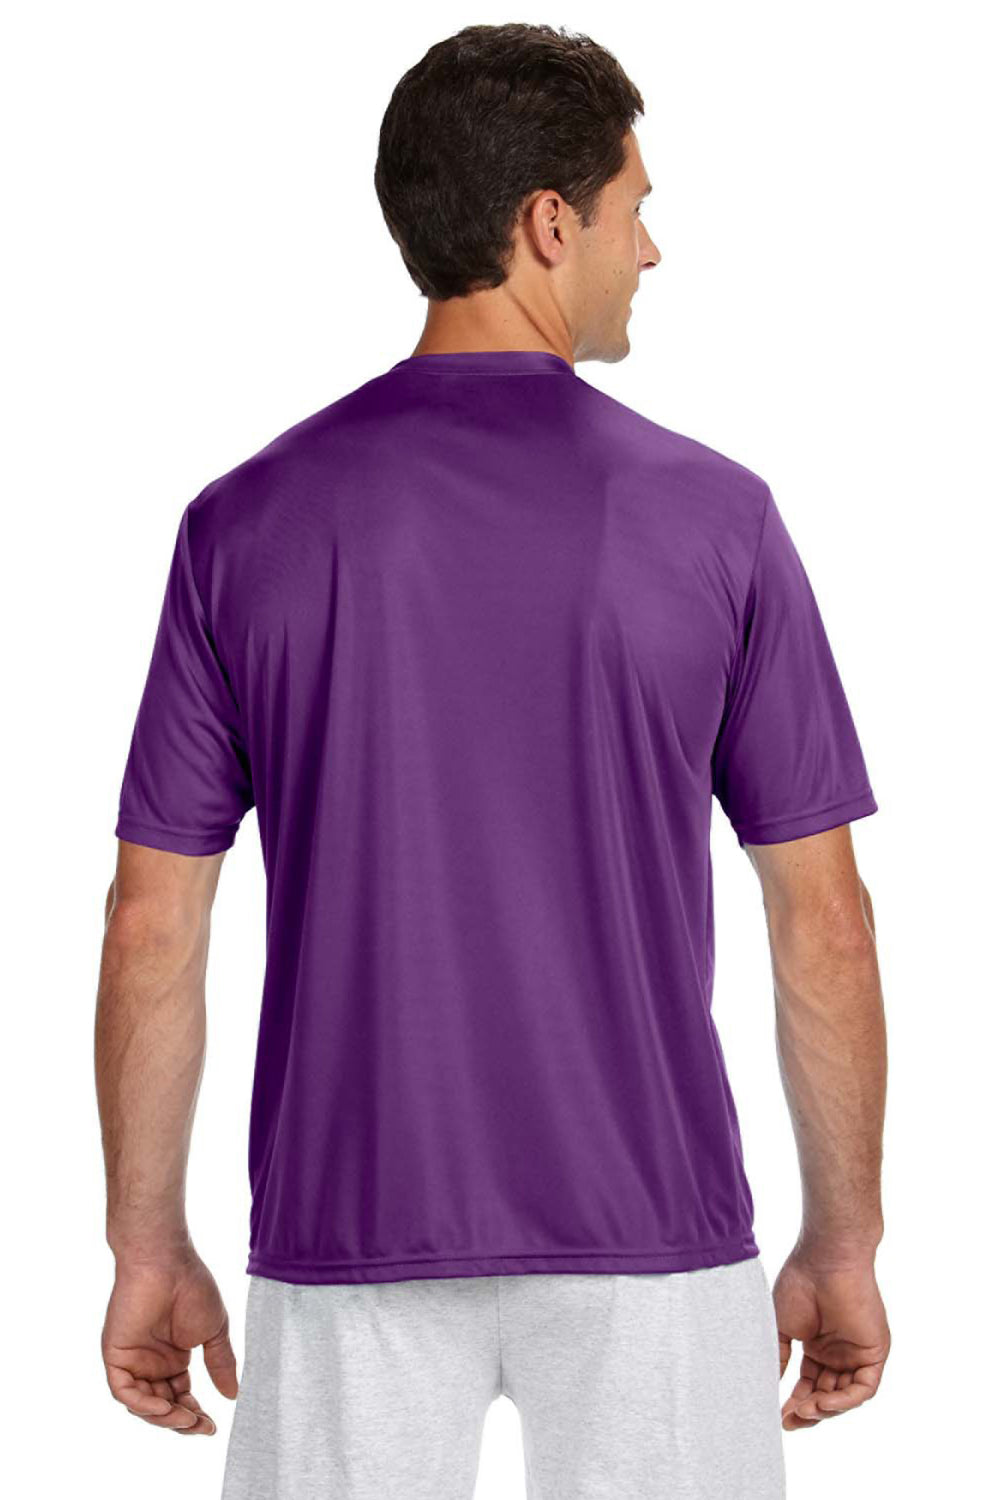 A4 N3142 Mens Performance Moisture Wicking Short Sleeve Crewneck T-Shirt Purple Model Back